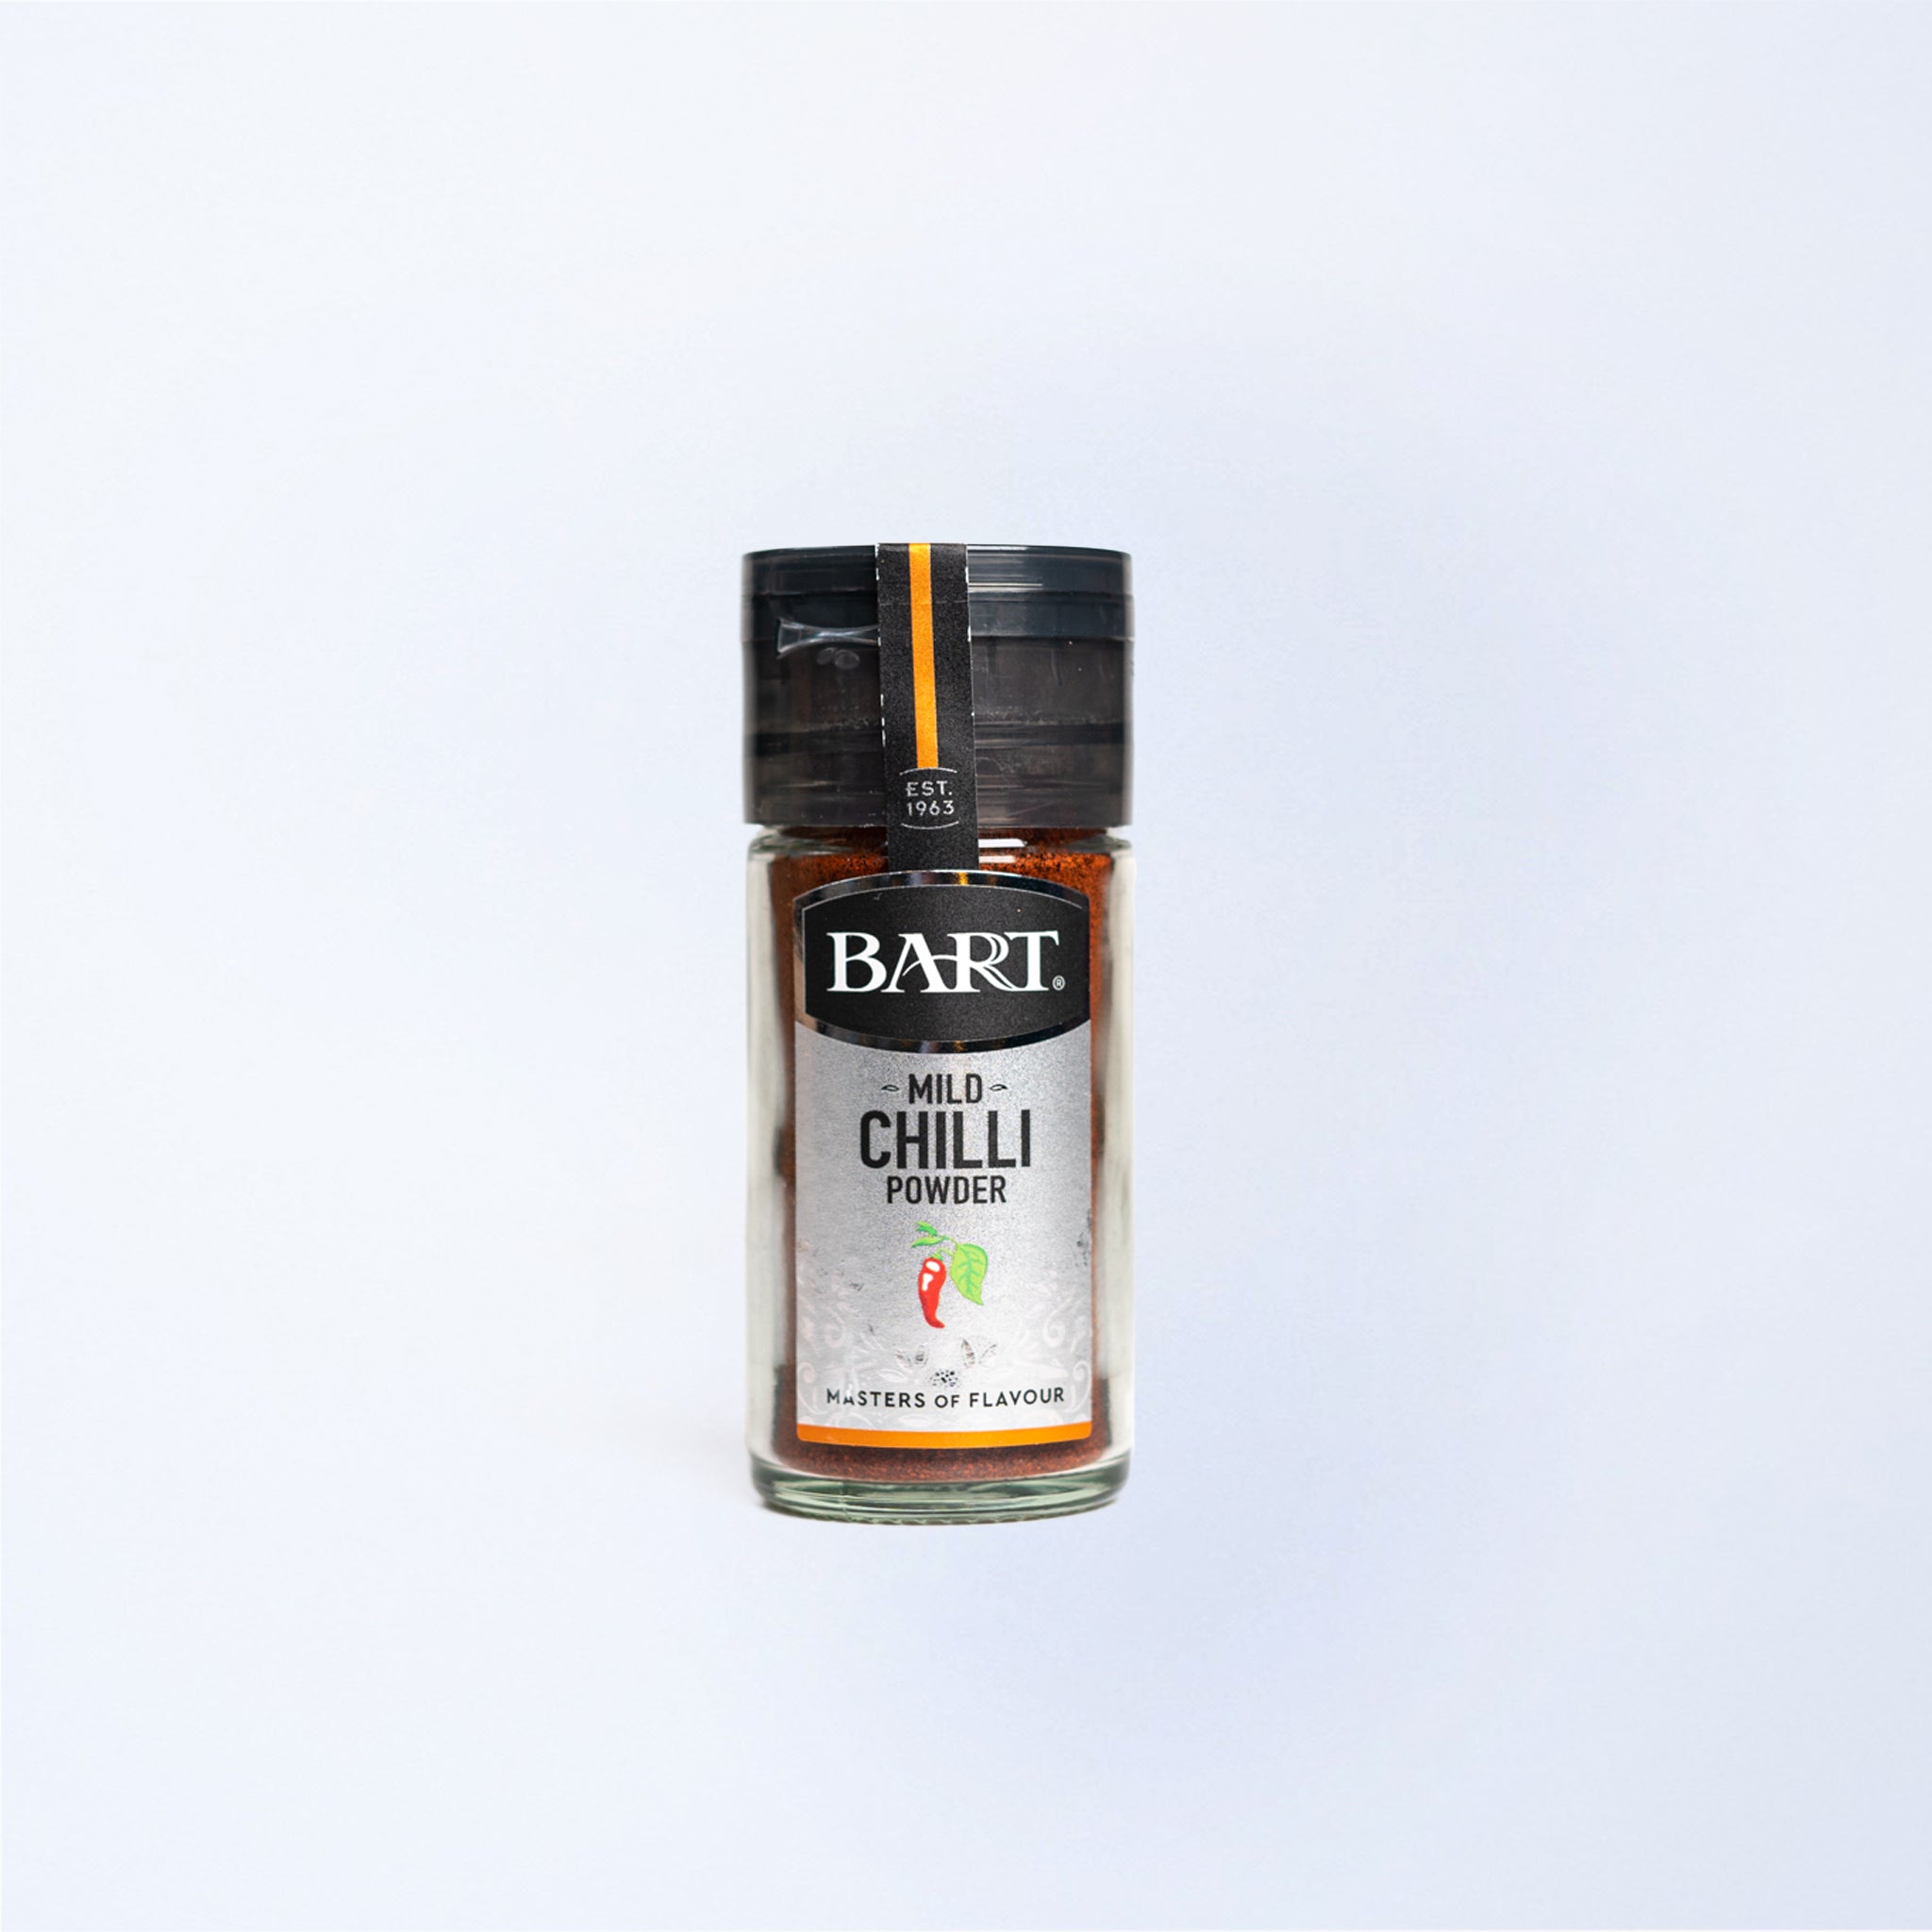 A glass jar of Bart Mild Chilli Powder 40g.